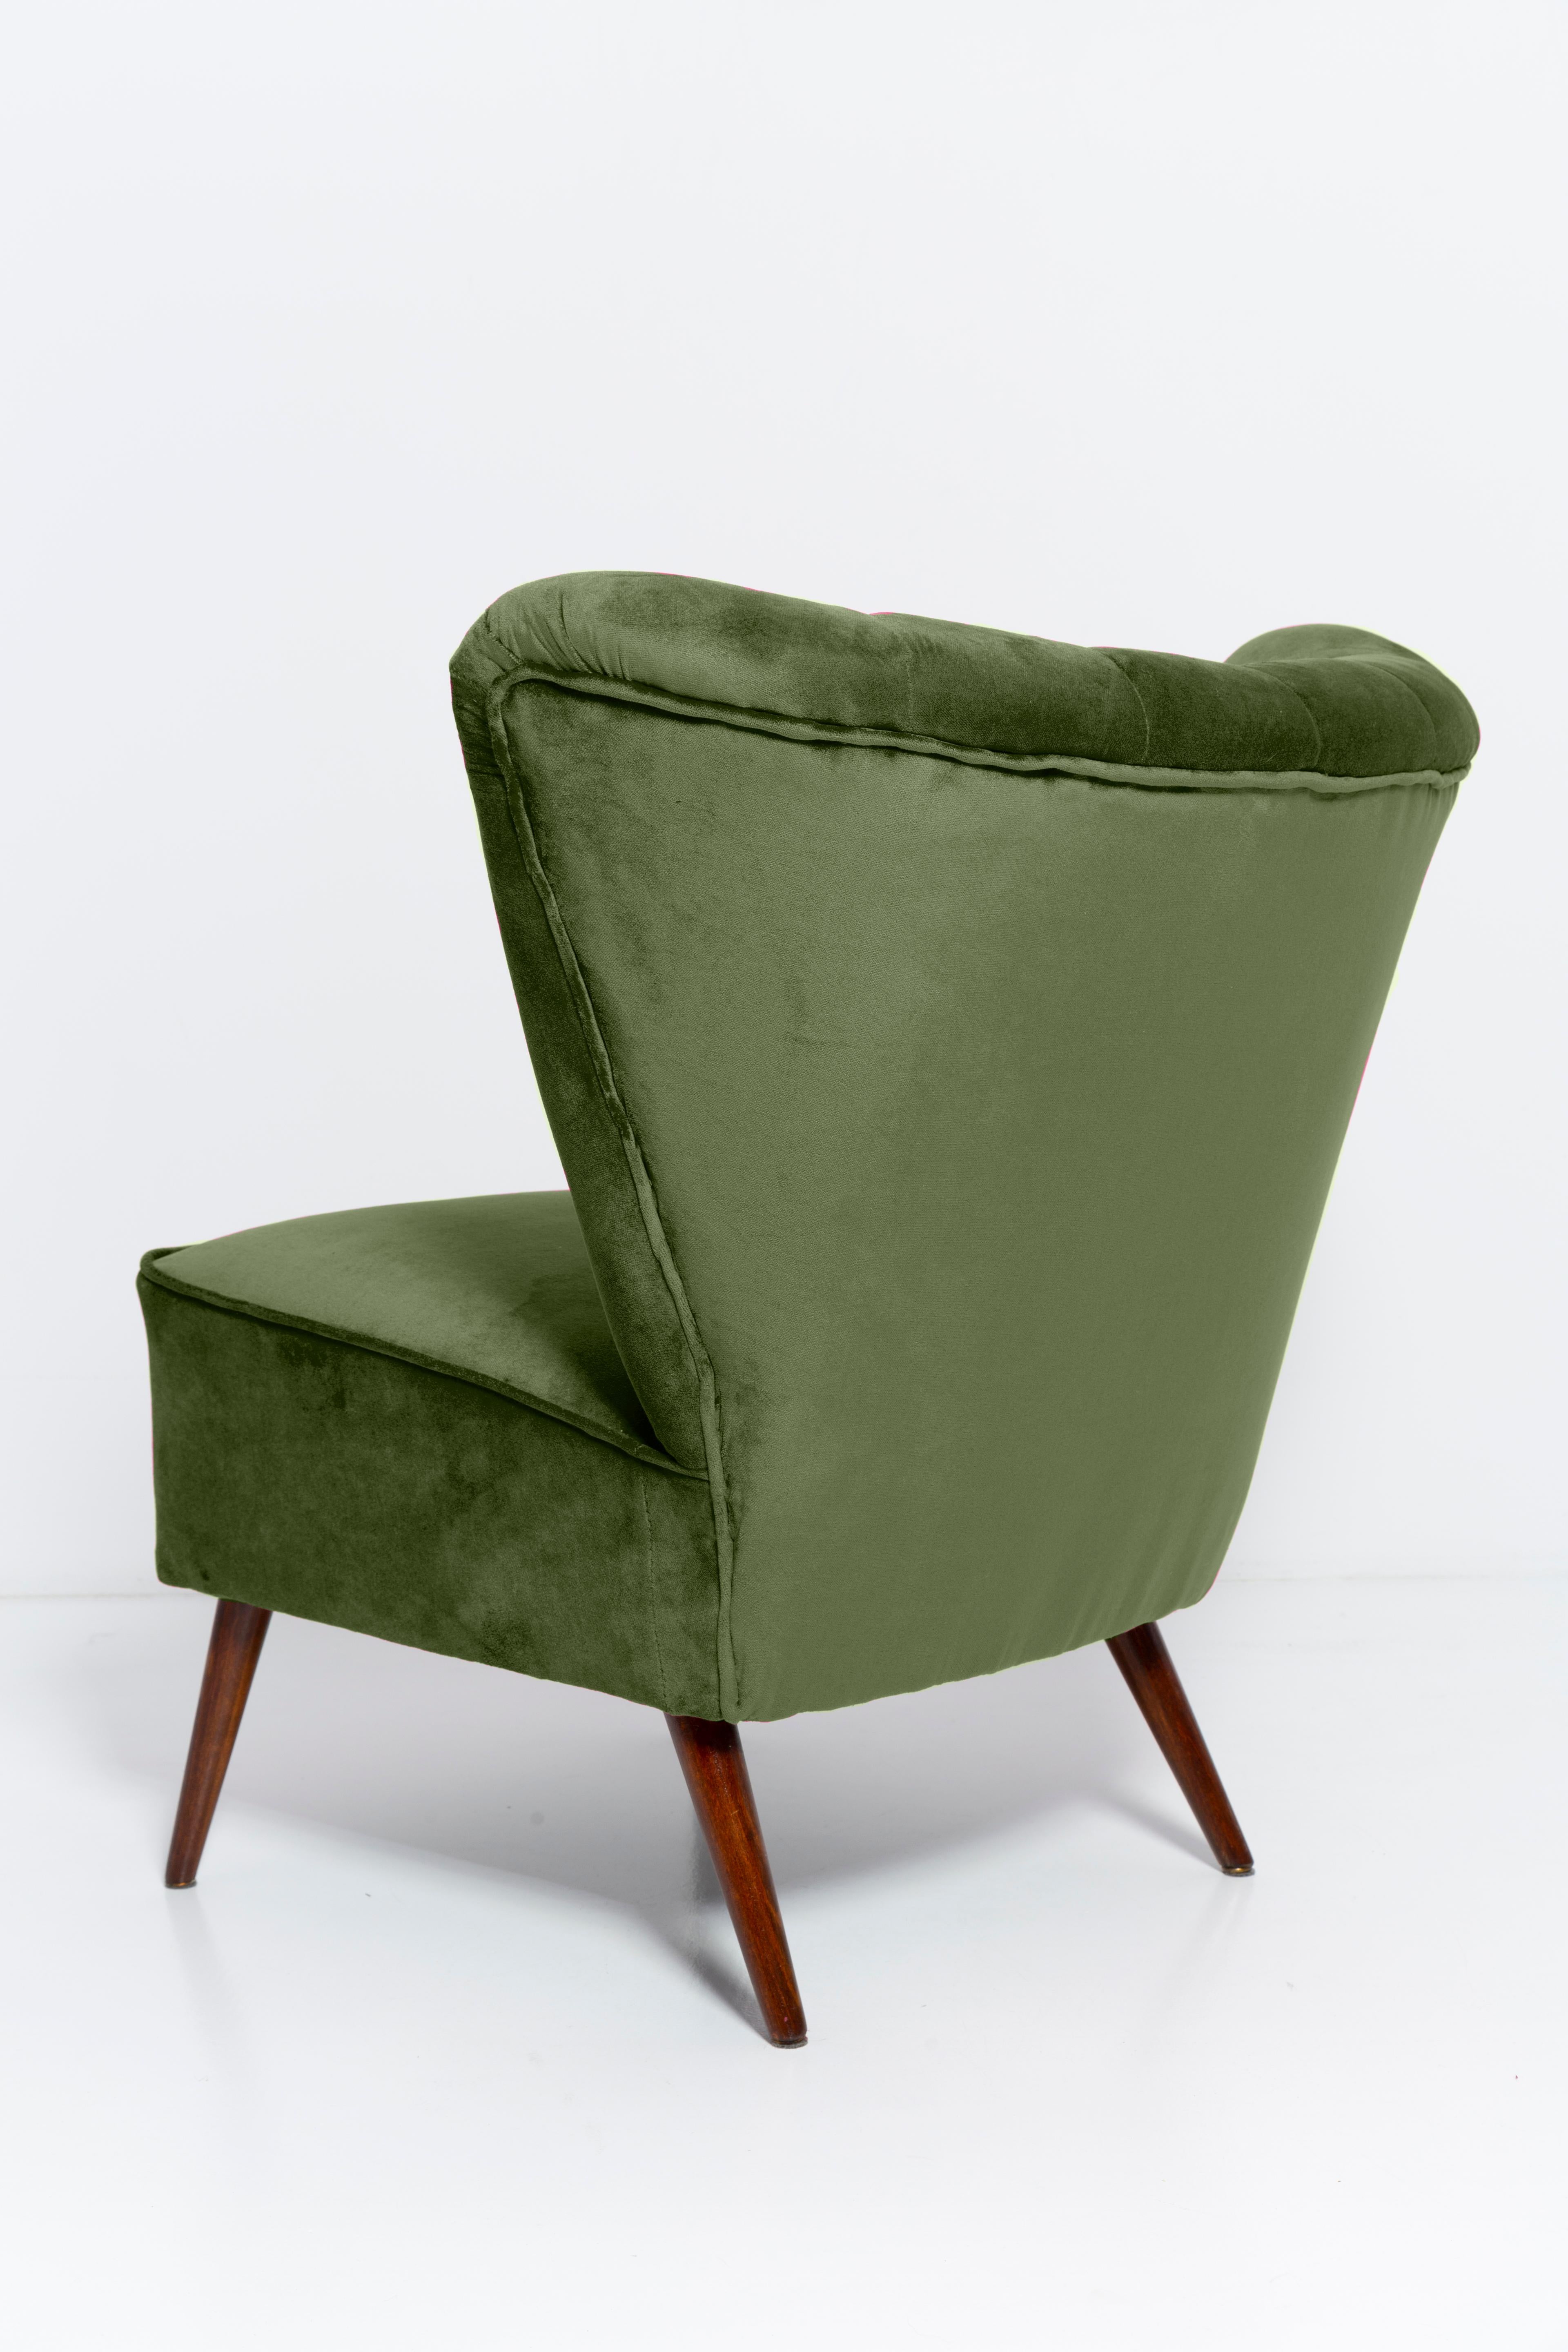 Midcentury Green Velvet Club Armchair, Europe, 1960s For Sale 6